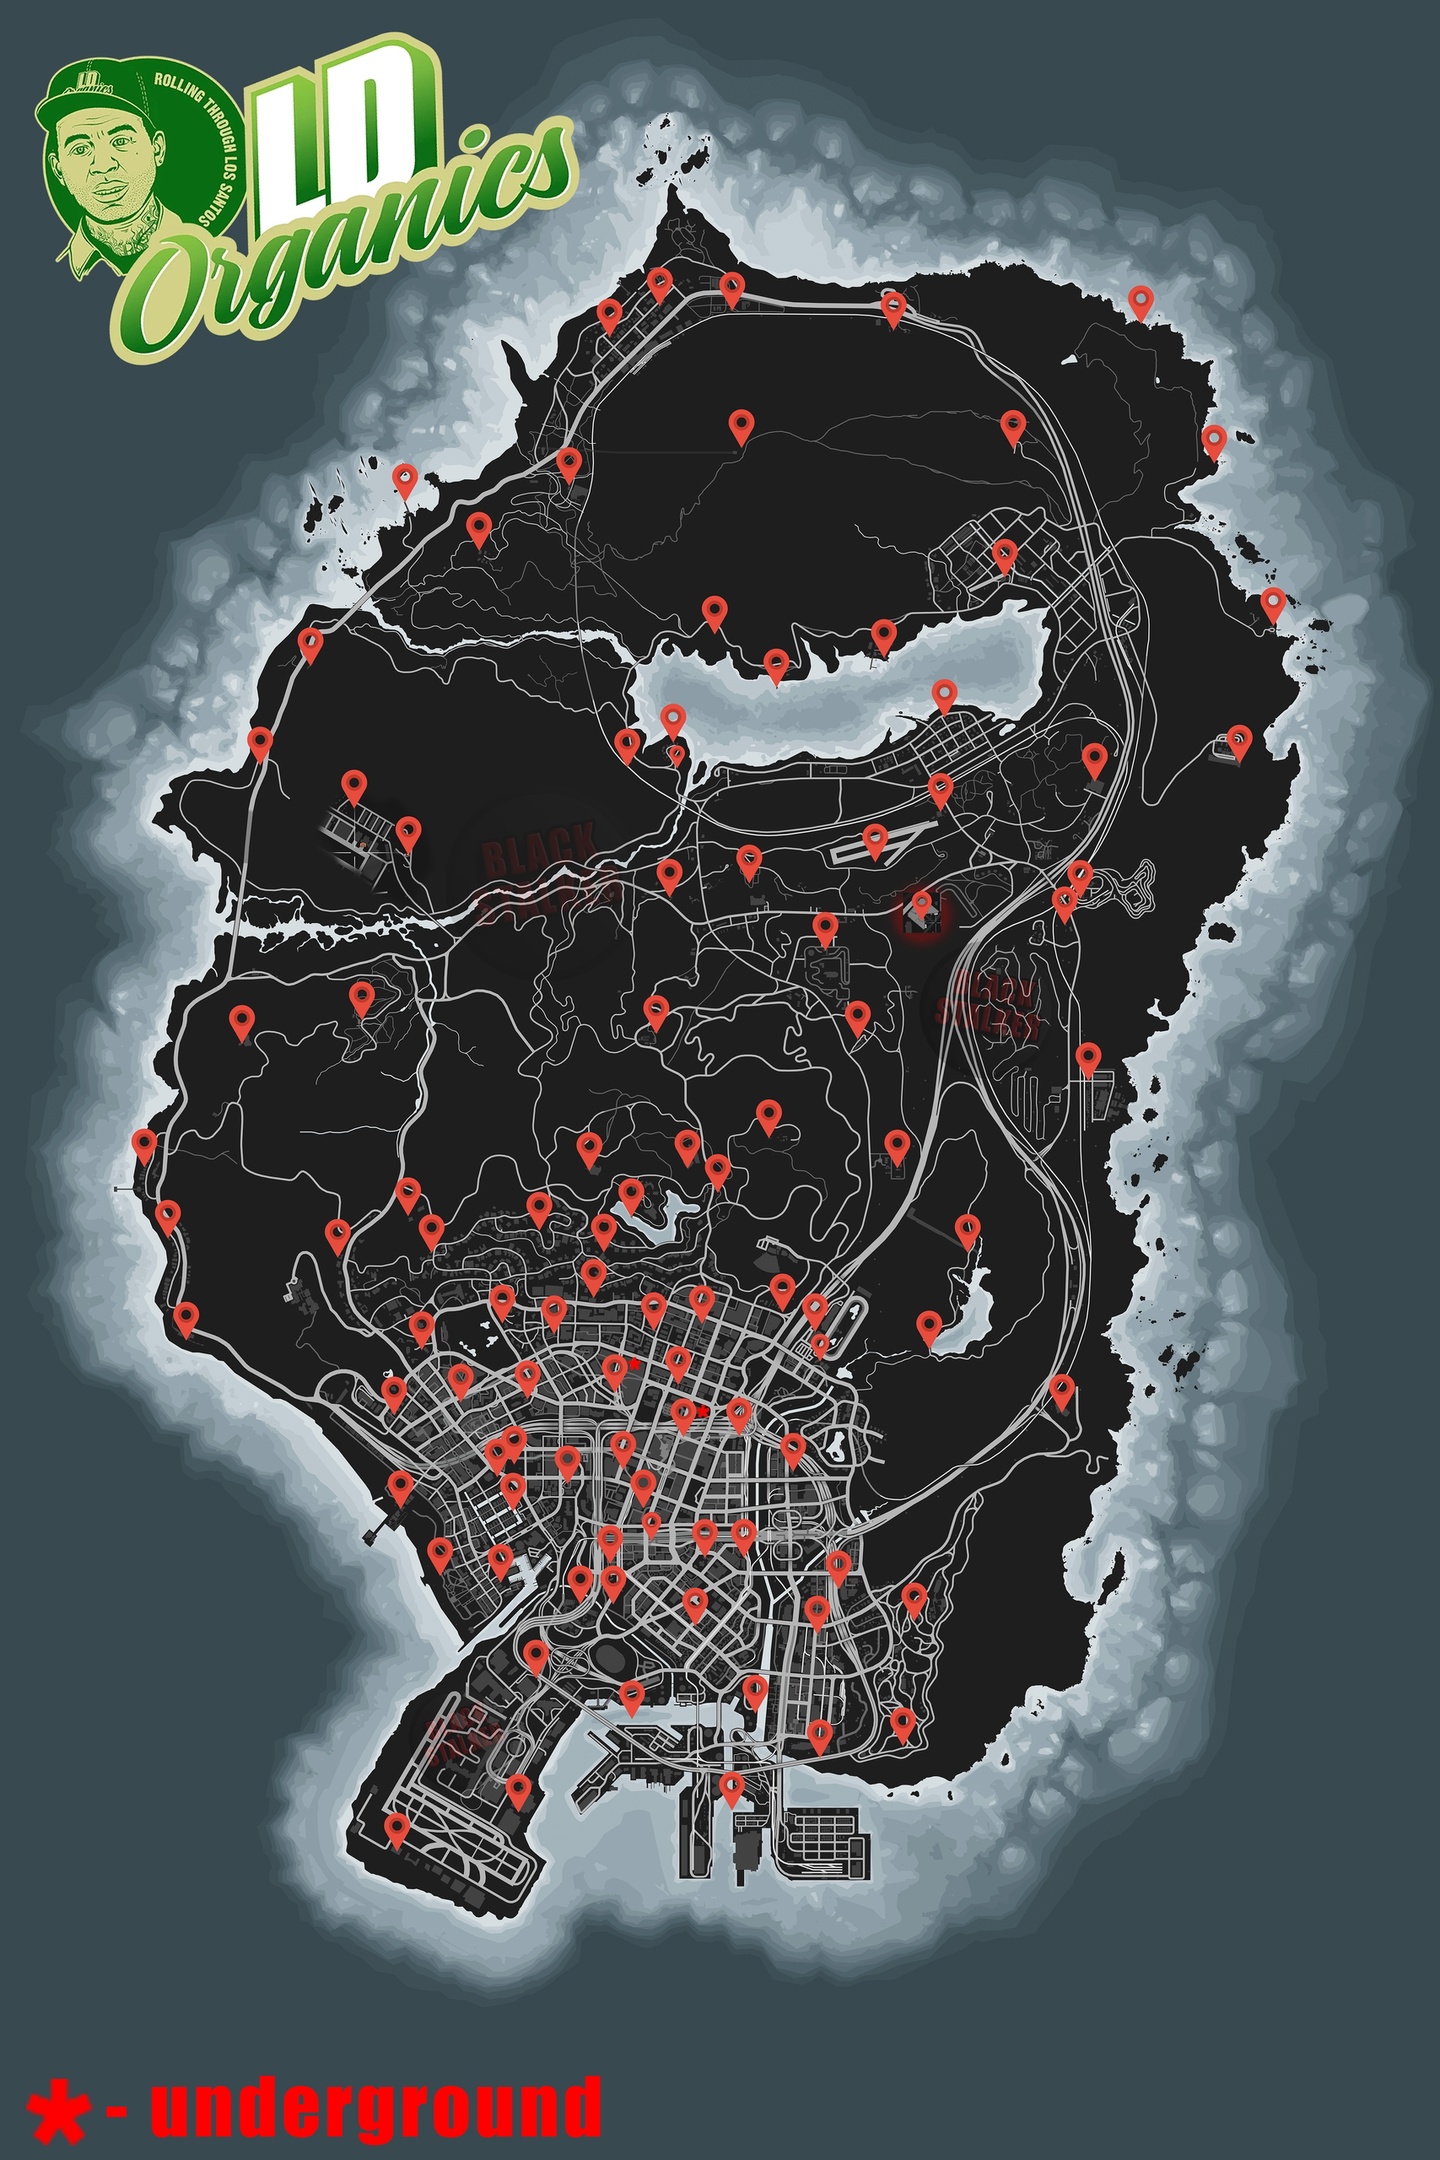 Gta v ld organics locations map